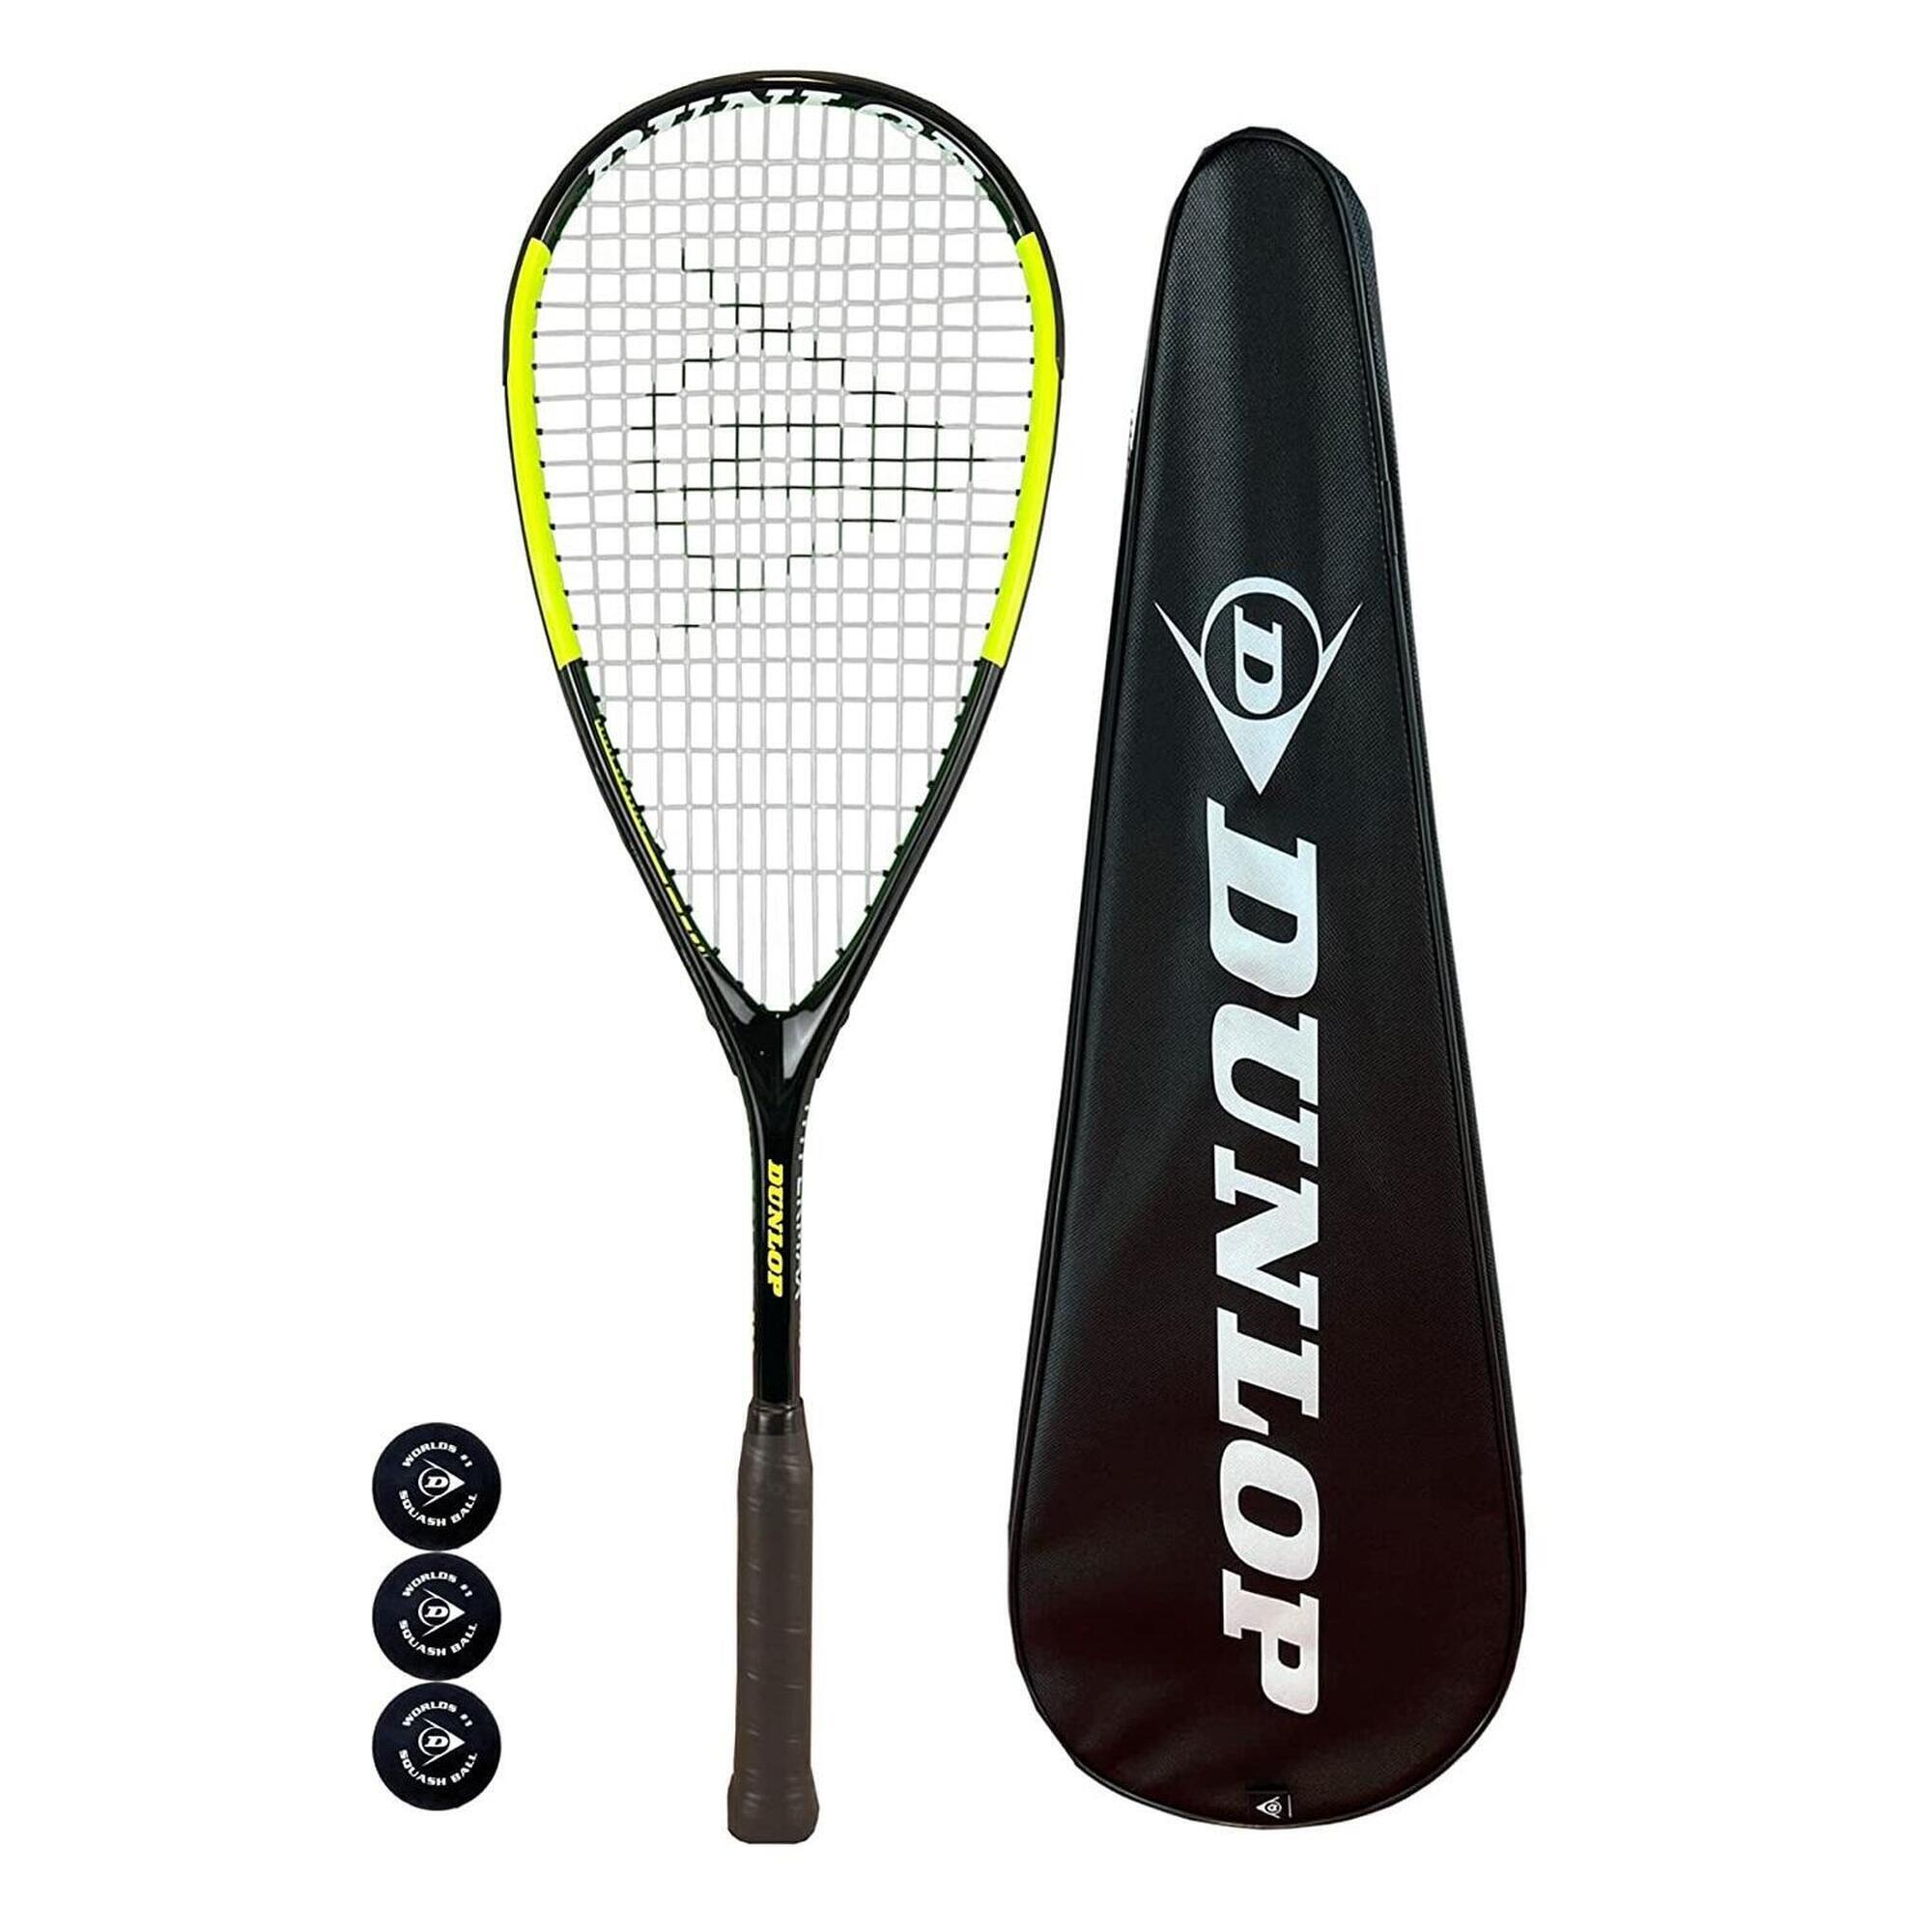 Dunlop Hypermax Pro Squash Racket, inc Full Protective Cover & 3 Squash Balls 1/1